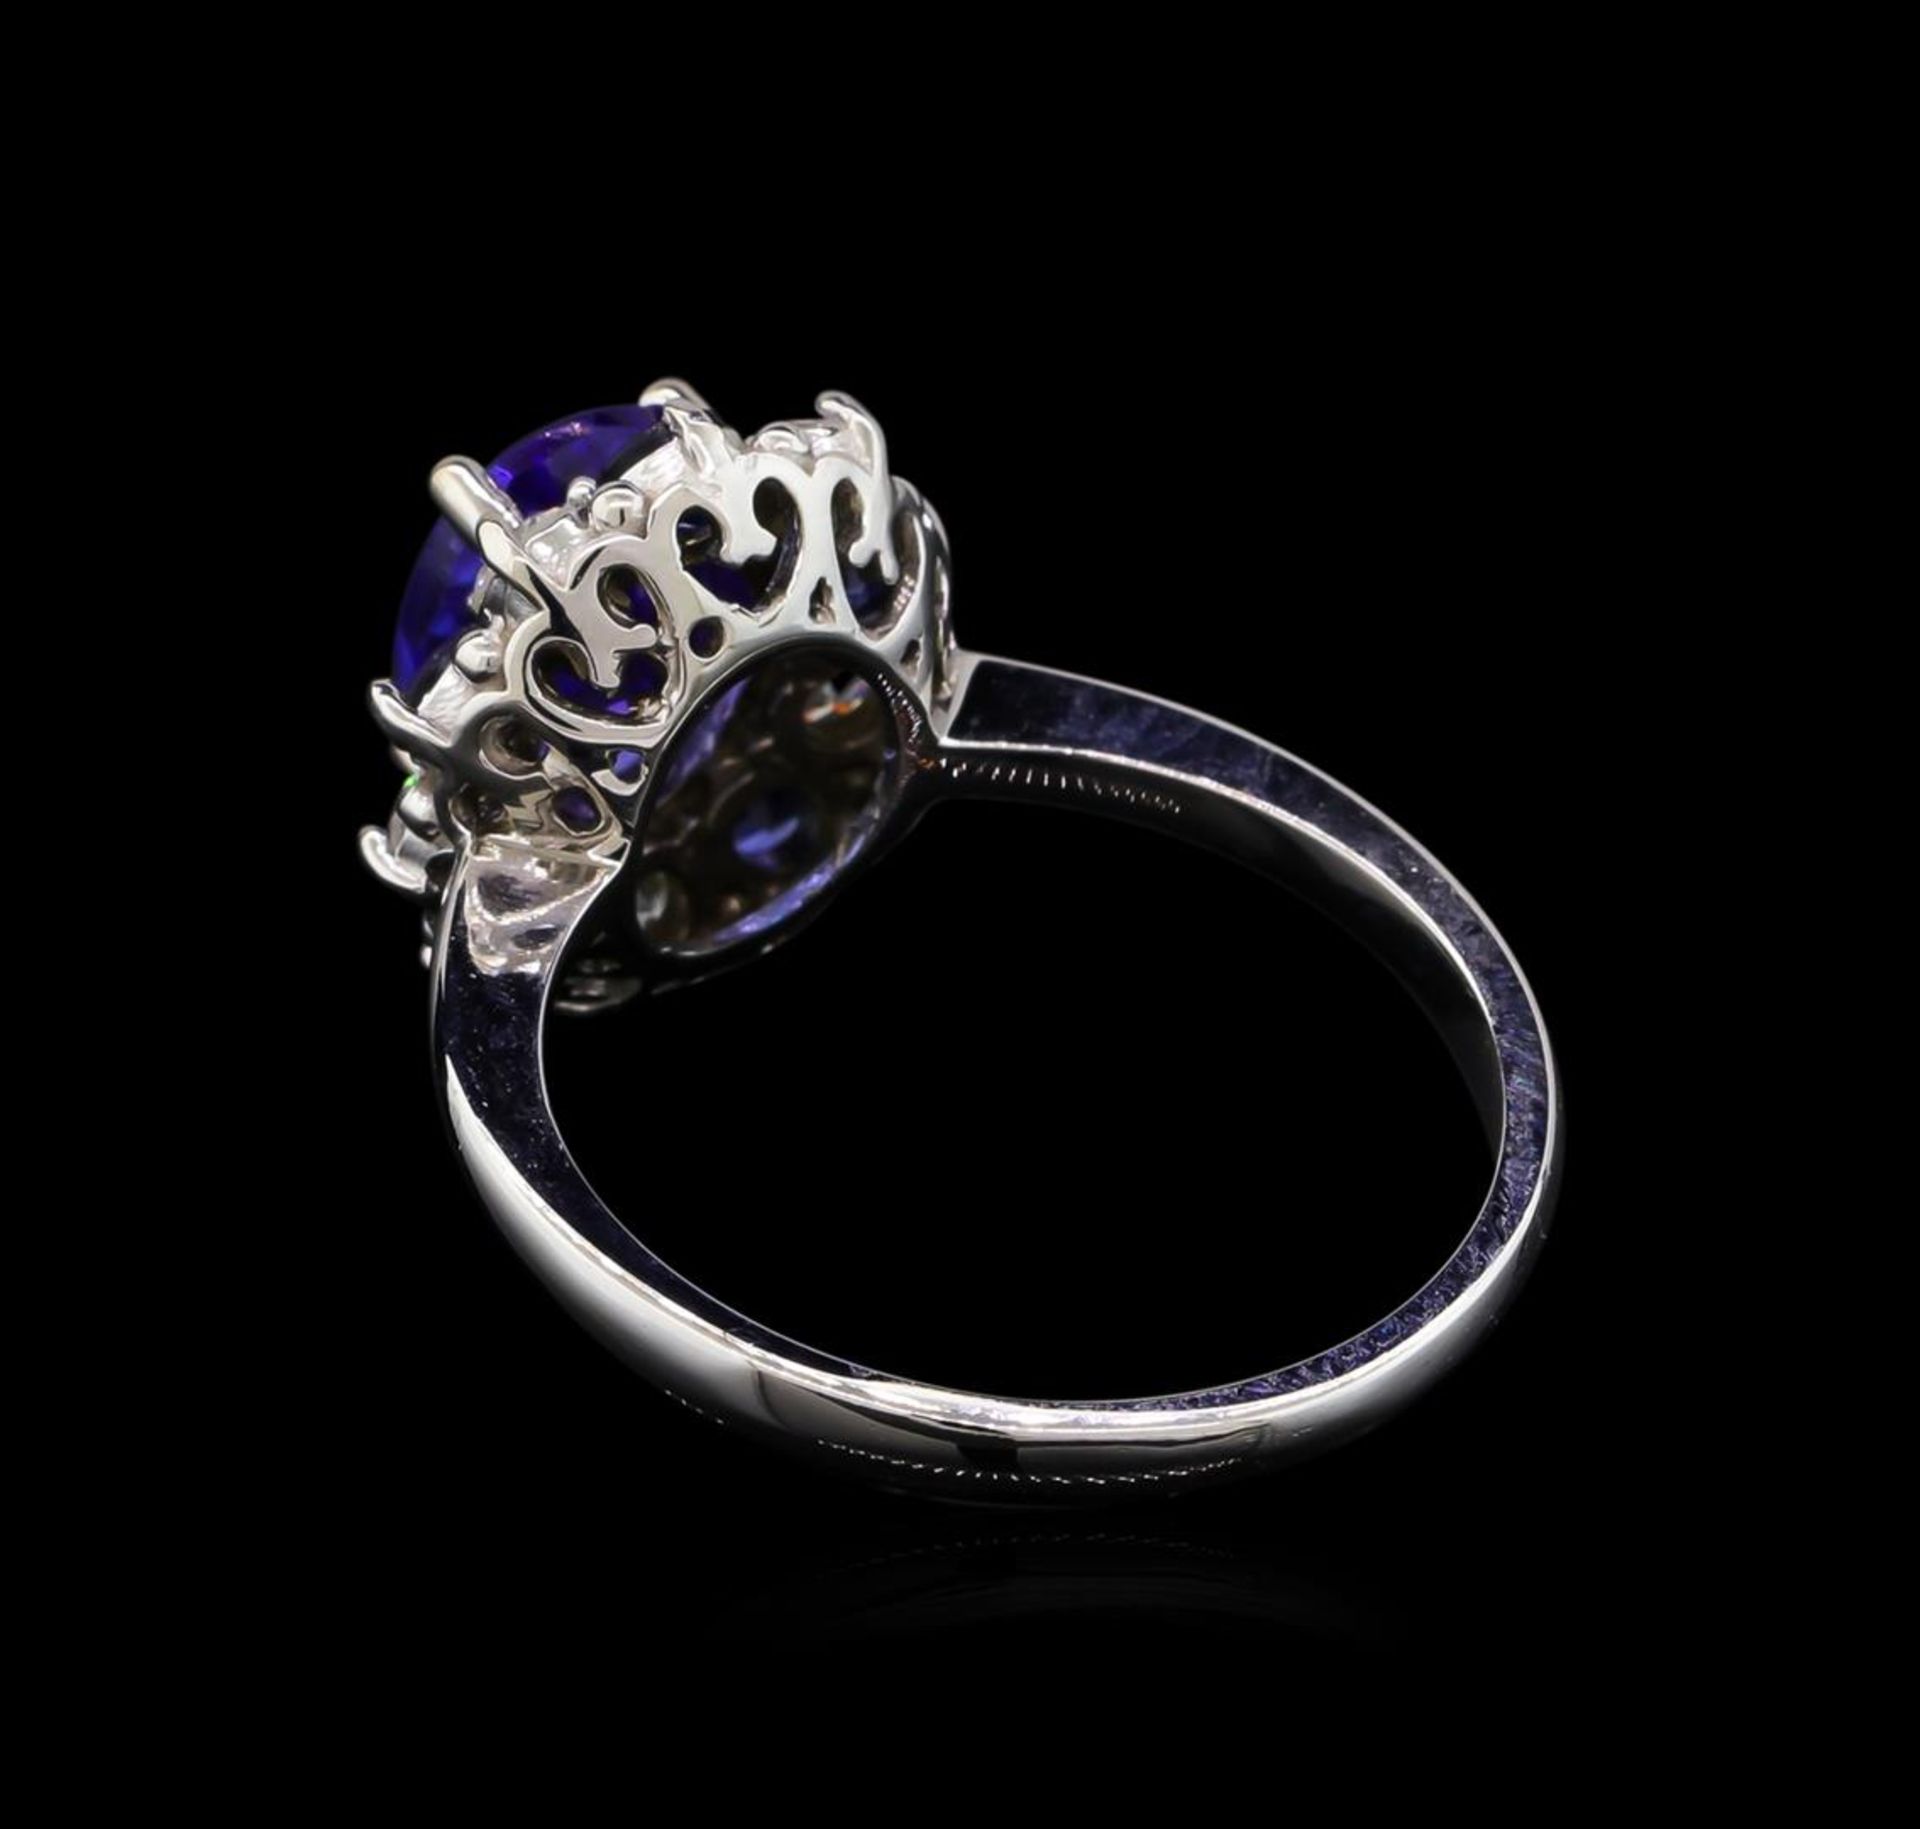 2.55ct Tanzanite, Sapphire and Diamond Ring - 14KT White Gold - Image 3 of 4